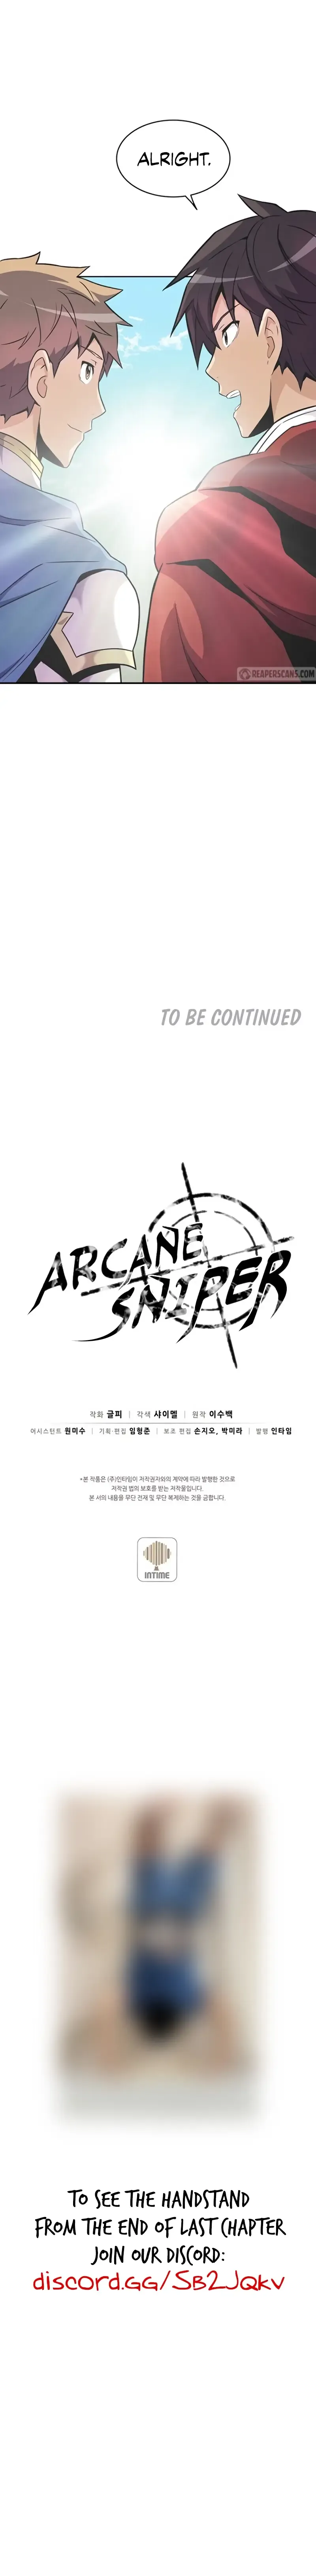 Arcane Sniper - Chapter 22